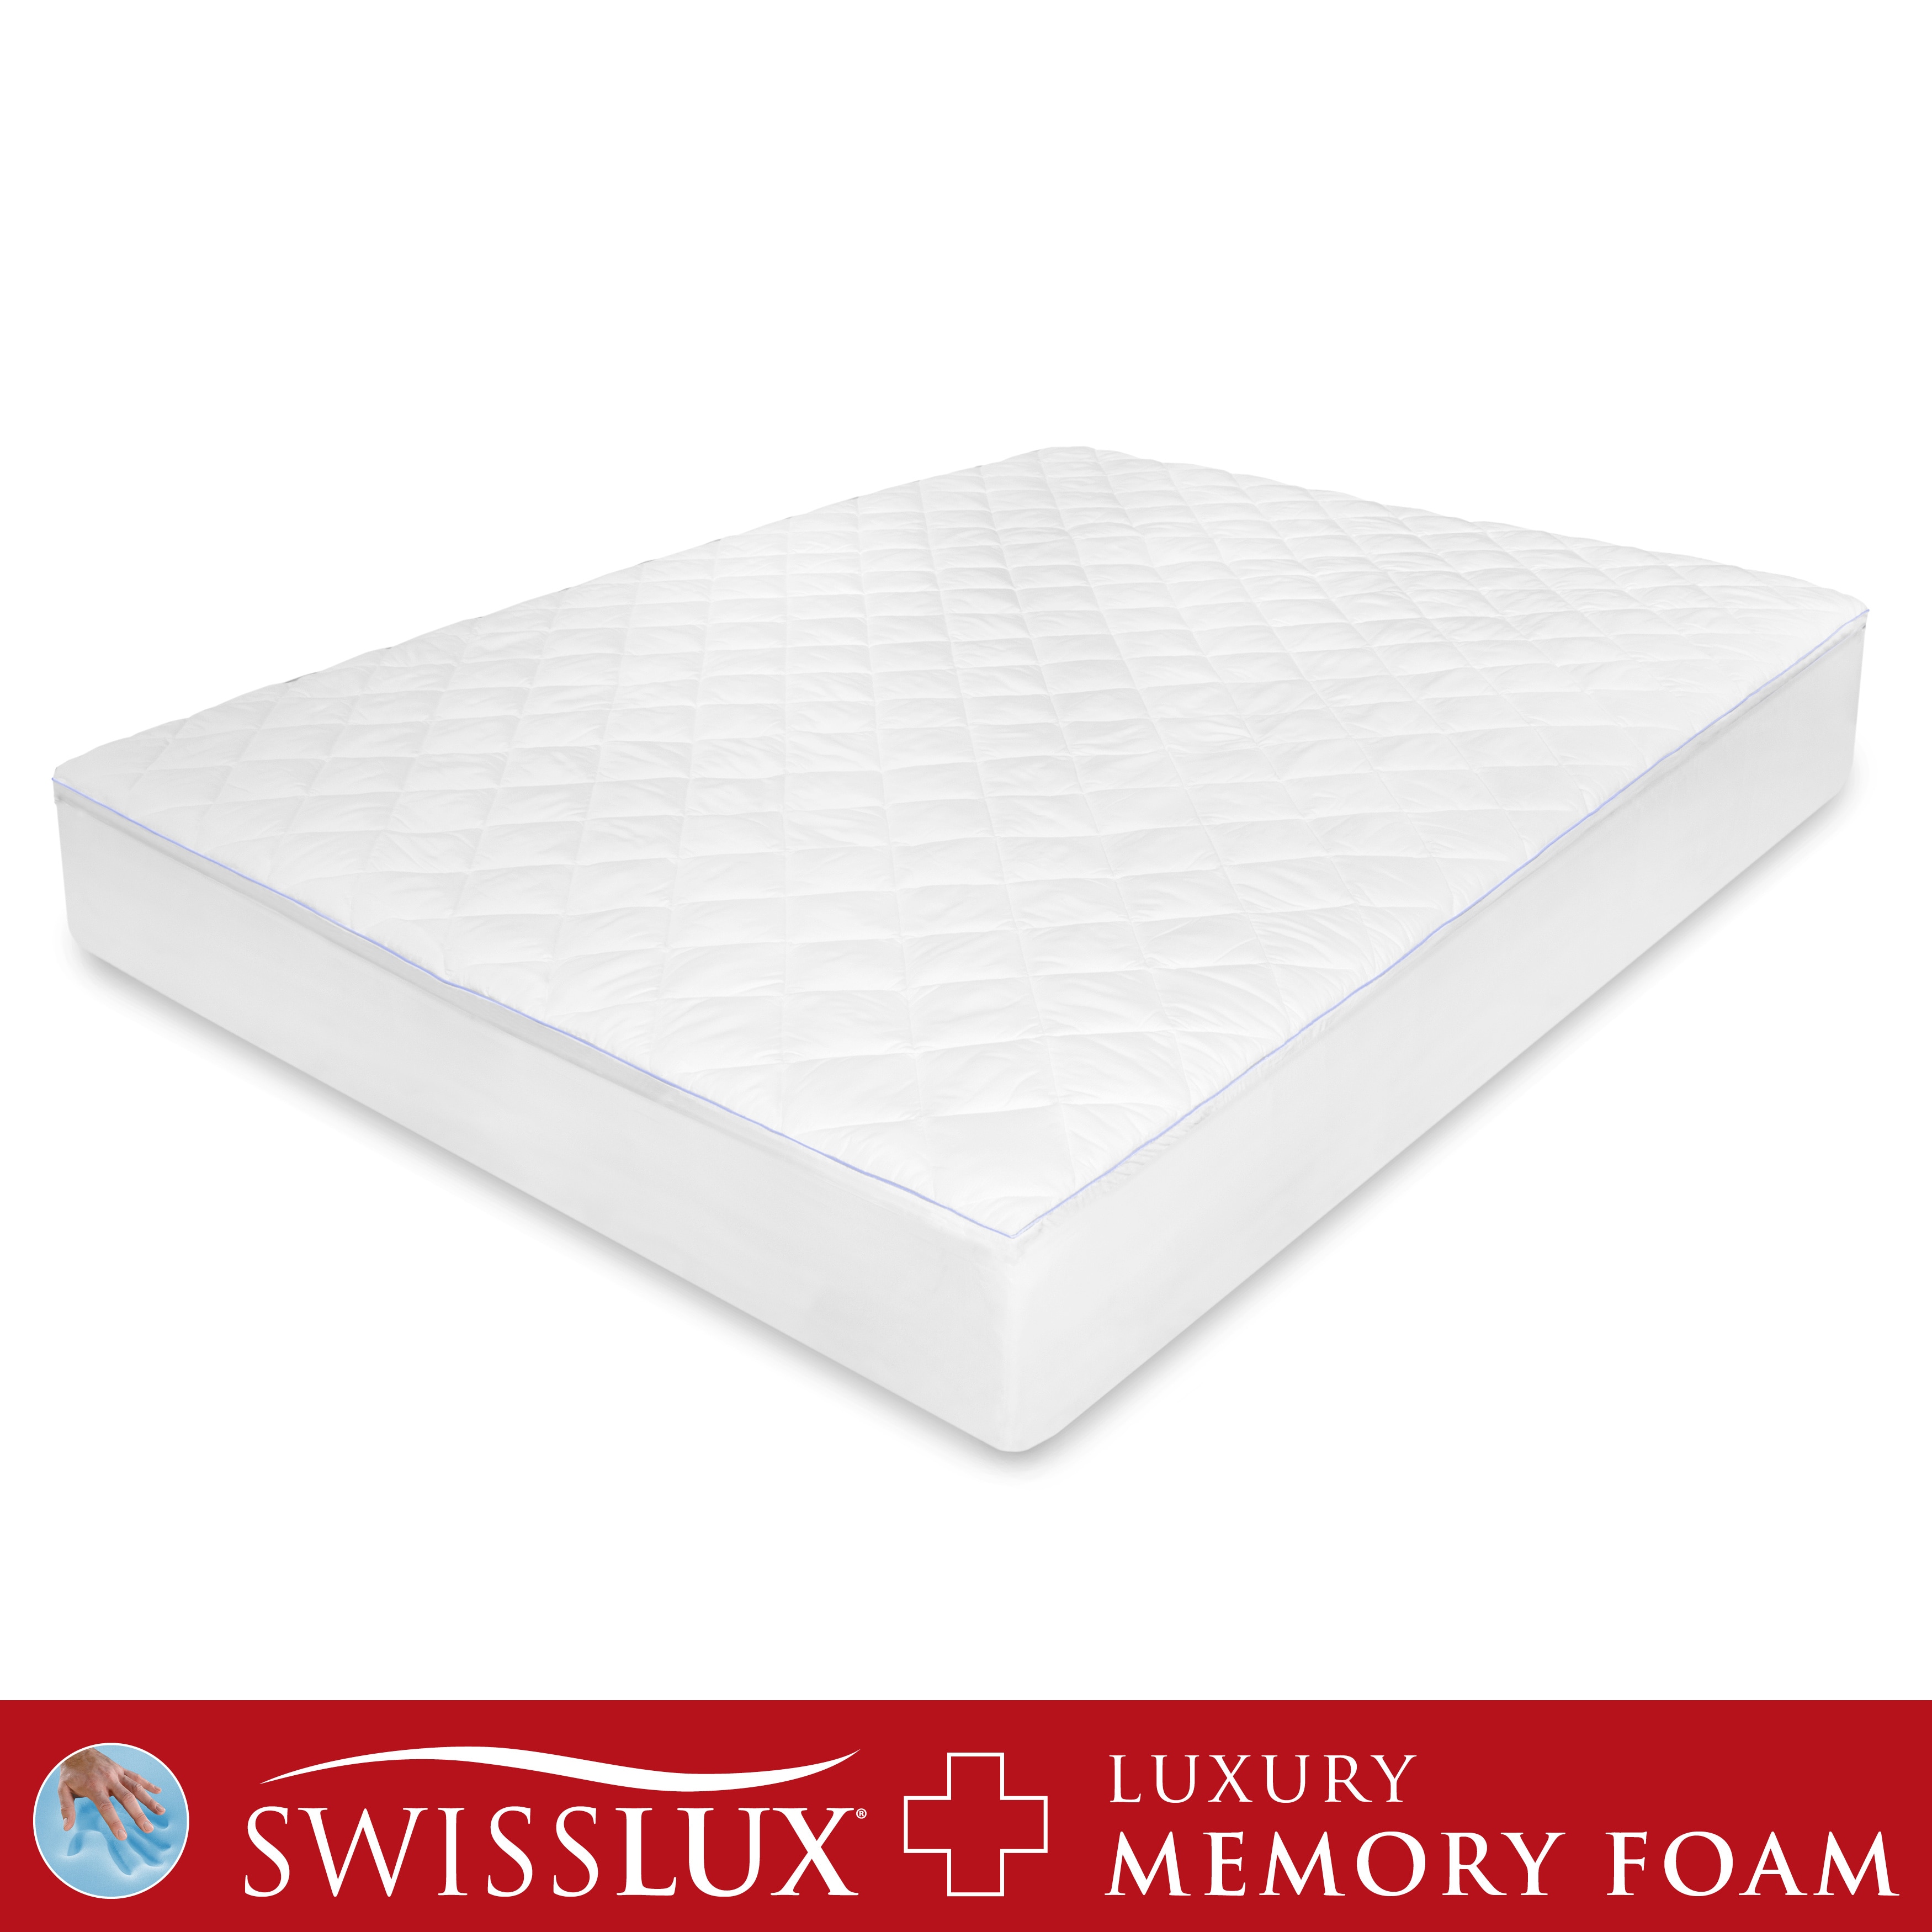 Swisslux Washable Euro Top Memory Foam Mattress Pad